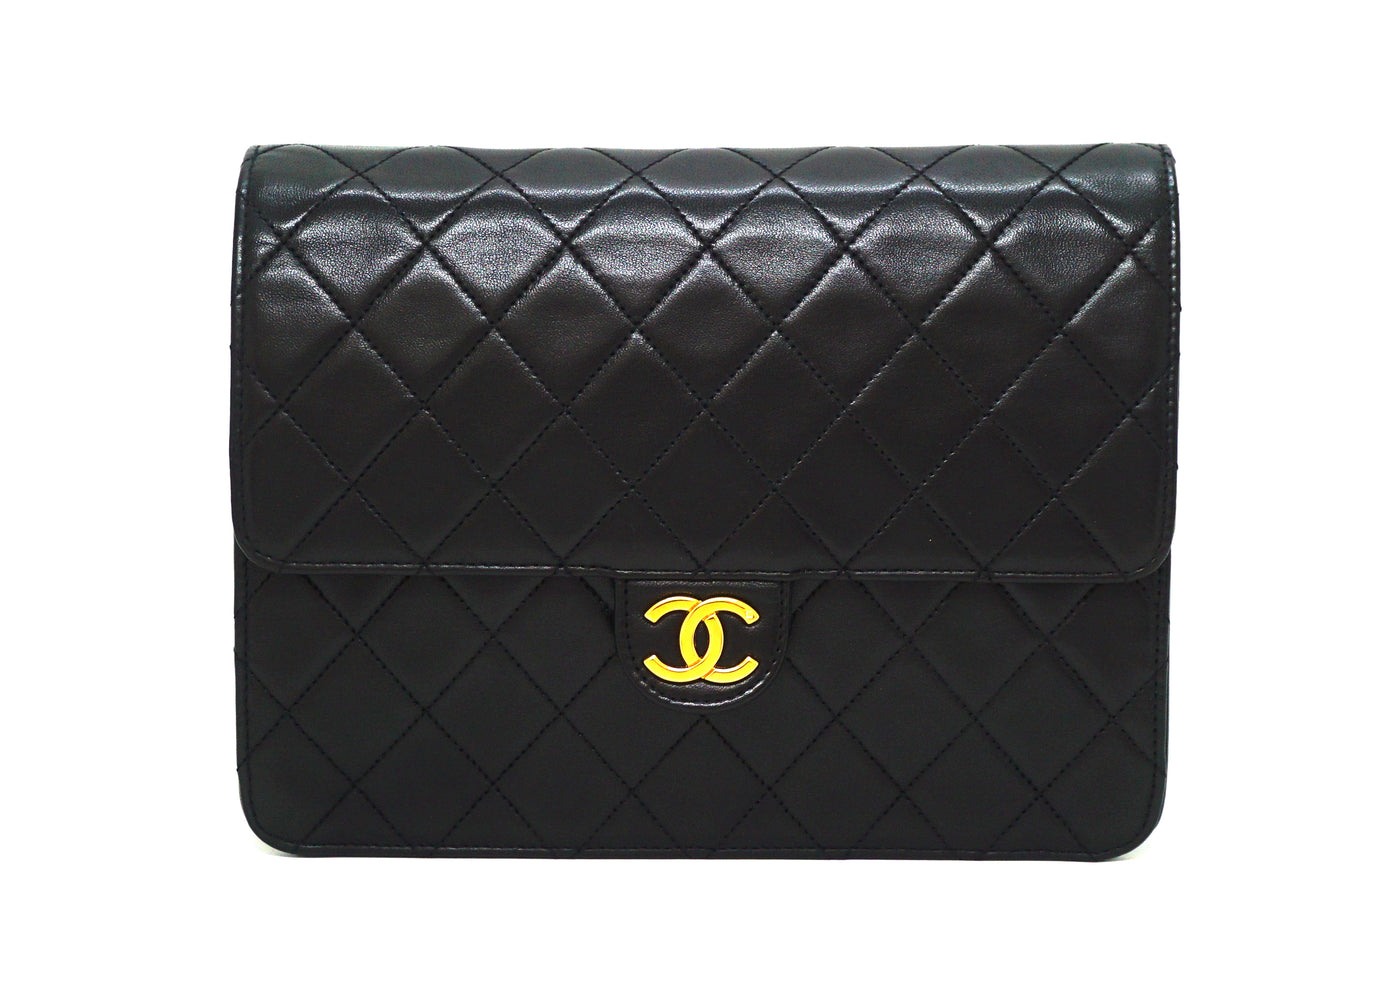 Chanel White/Black Lambskin vintage flap bag